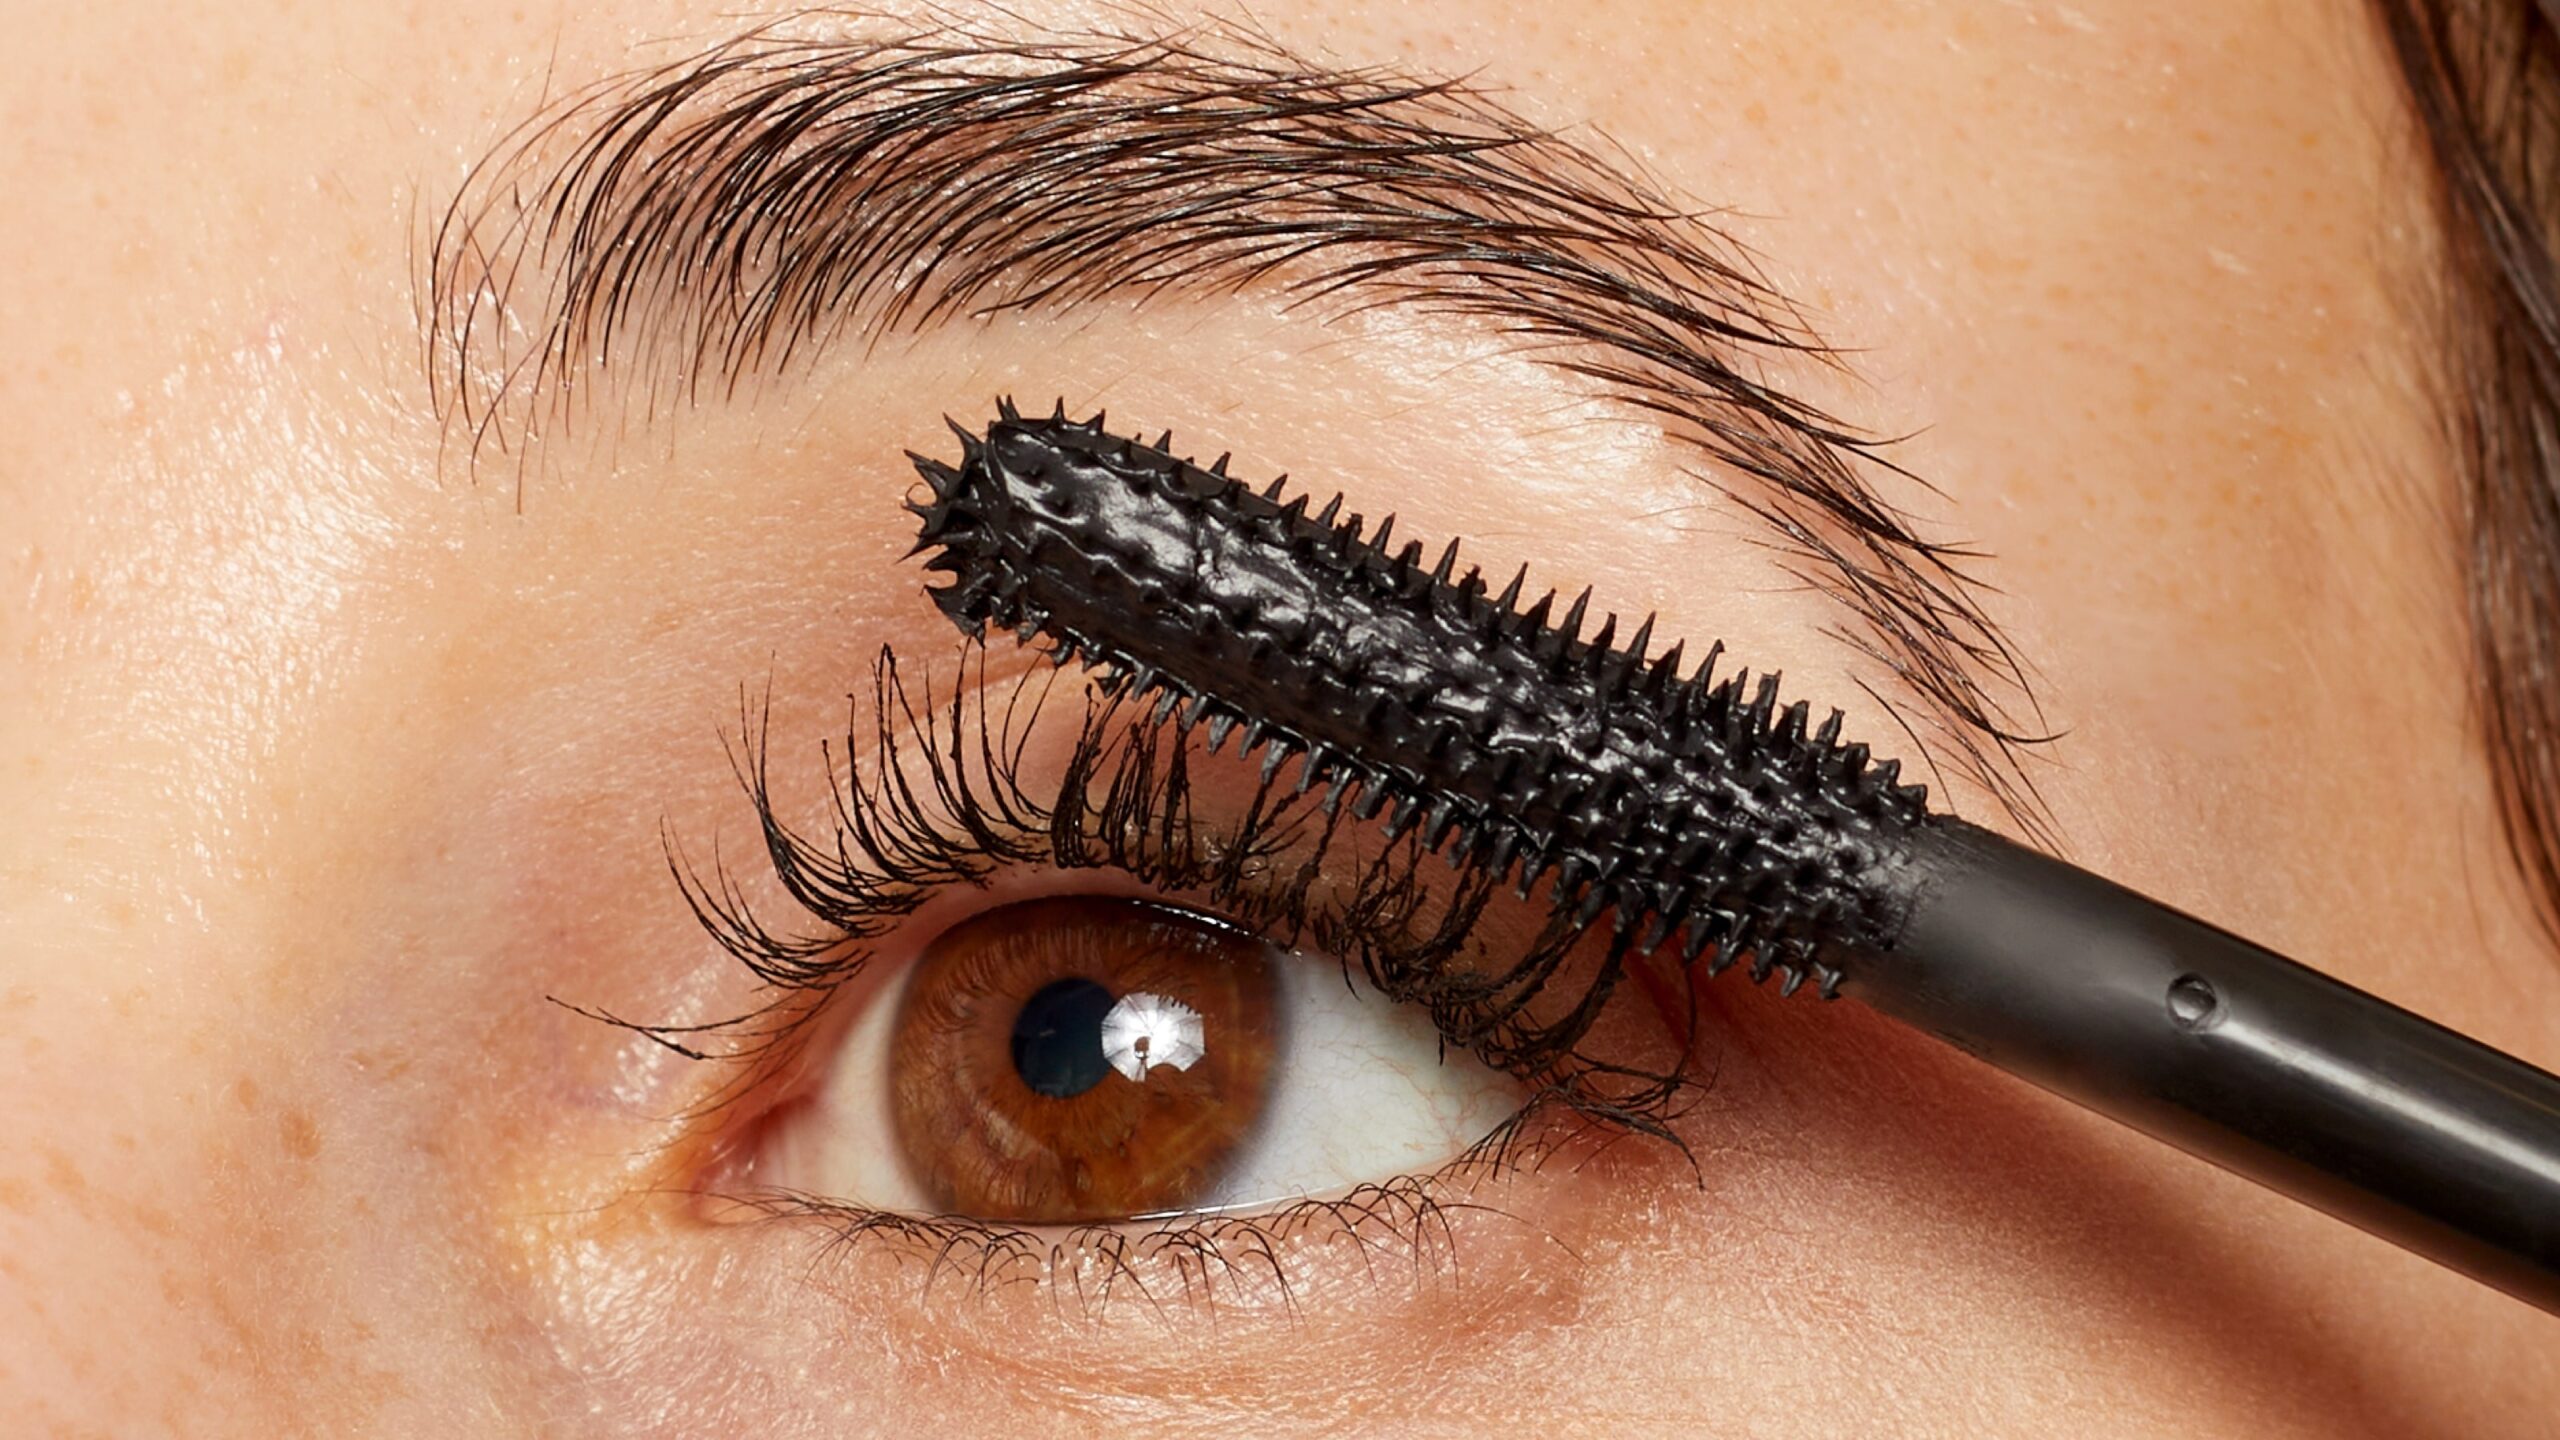 Volumising mascara being applied to eyelashes to make lashes look fuller